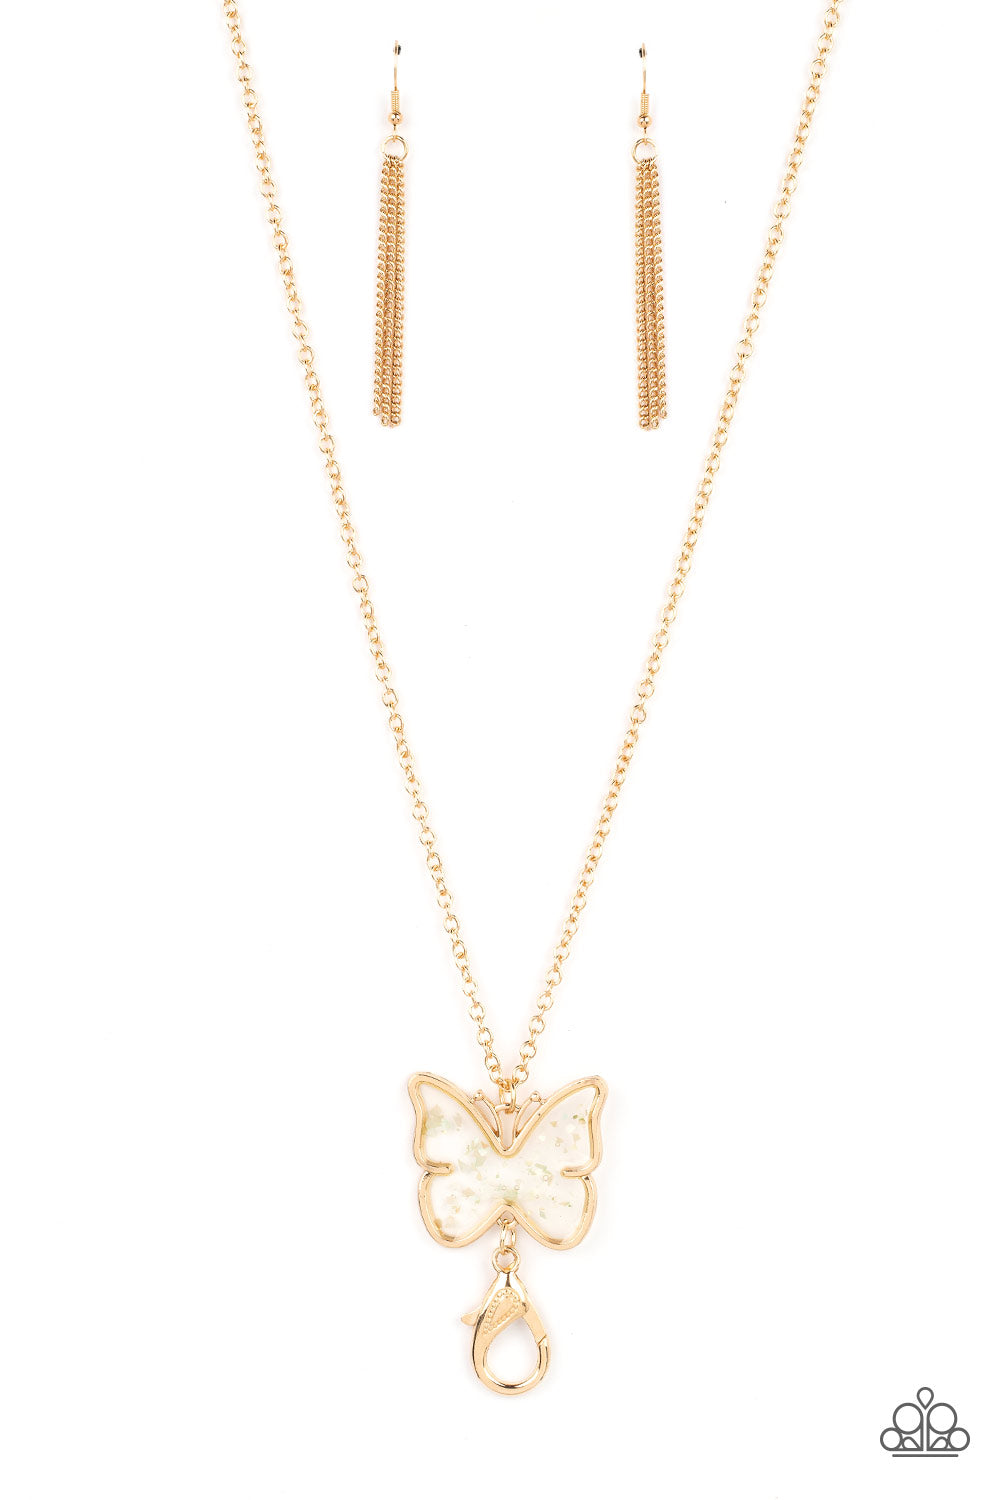 Paparazzi Accessories - Gives Me Butterflies - Gold Butterflies Necklace